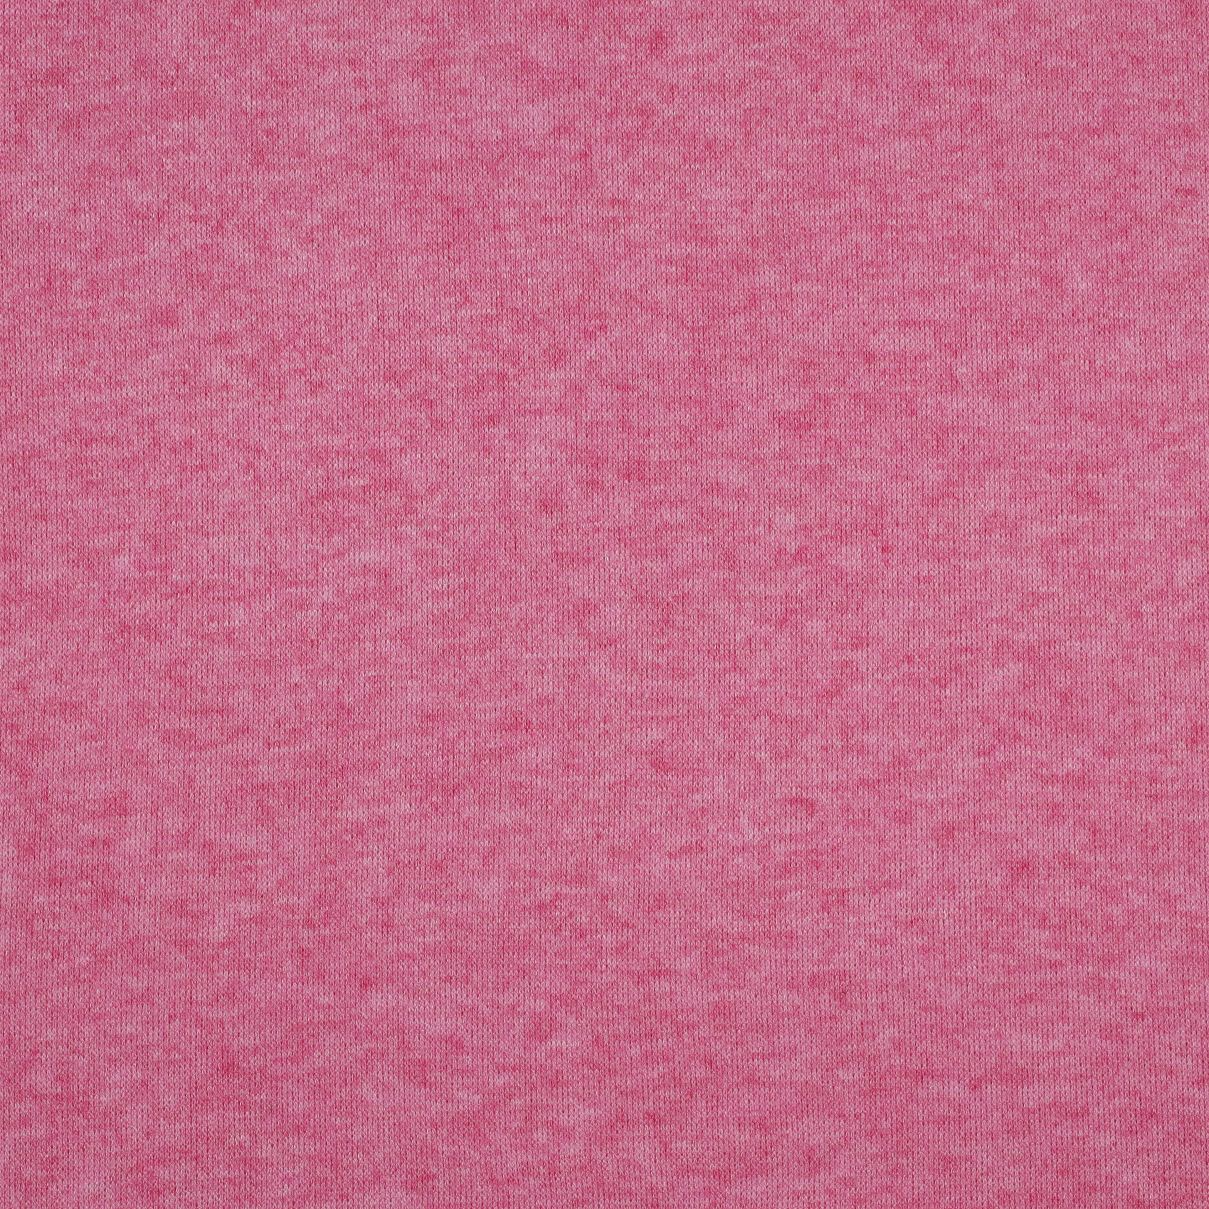 Snug Viscose Blend Sweater Knit in Fuchsia Pink Melange